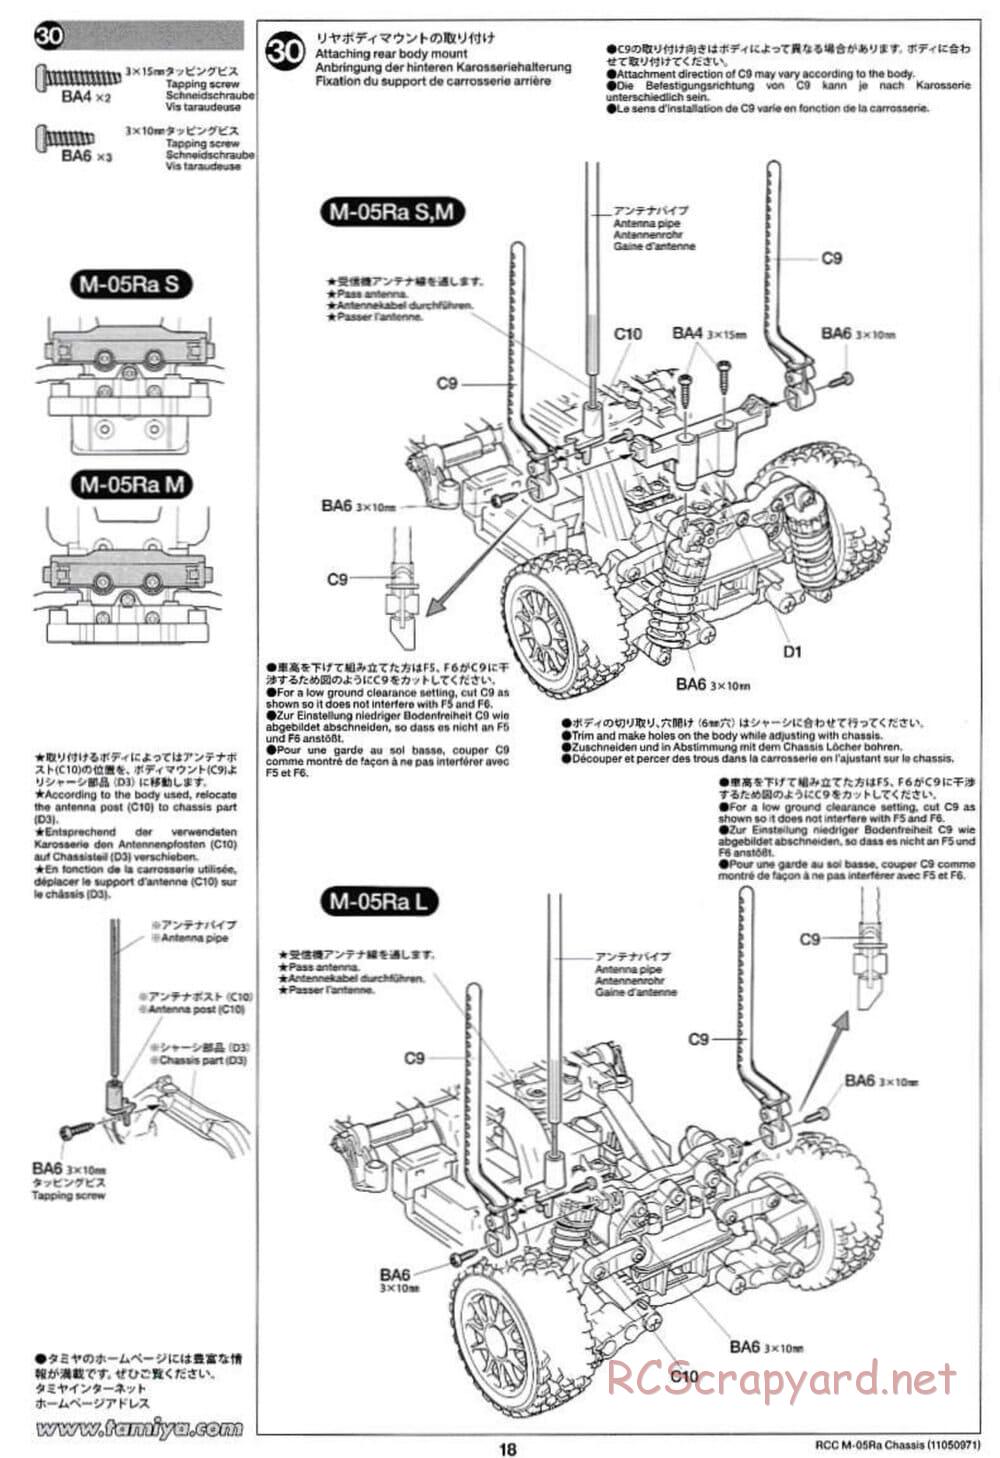 Tamiya - M-05Ra Chassis - Manual - Page 18